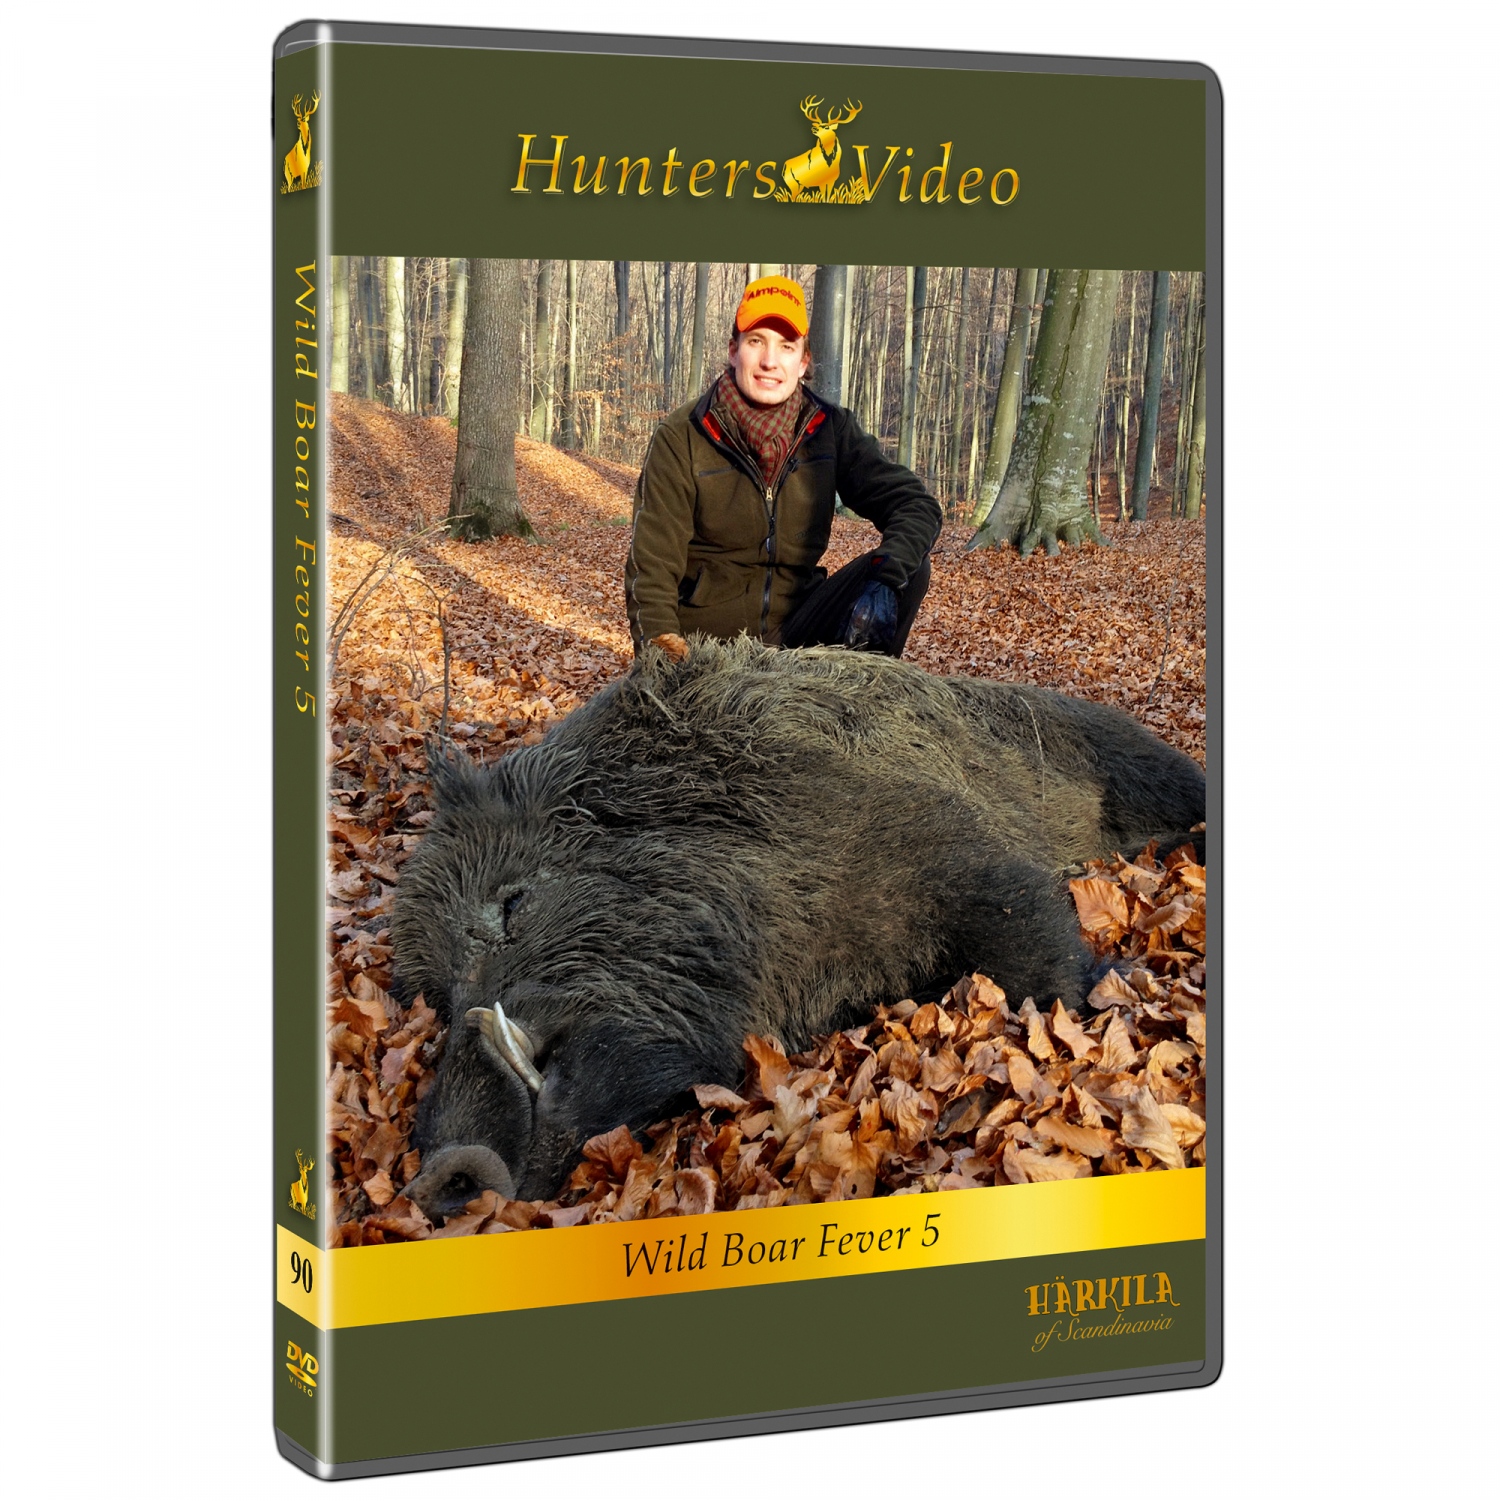 Hunters Video DVD Wild Boar Fever 5 